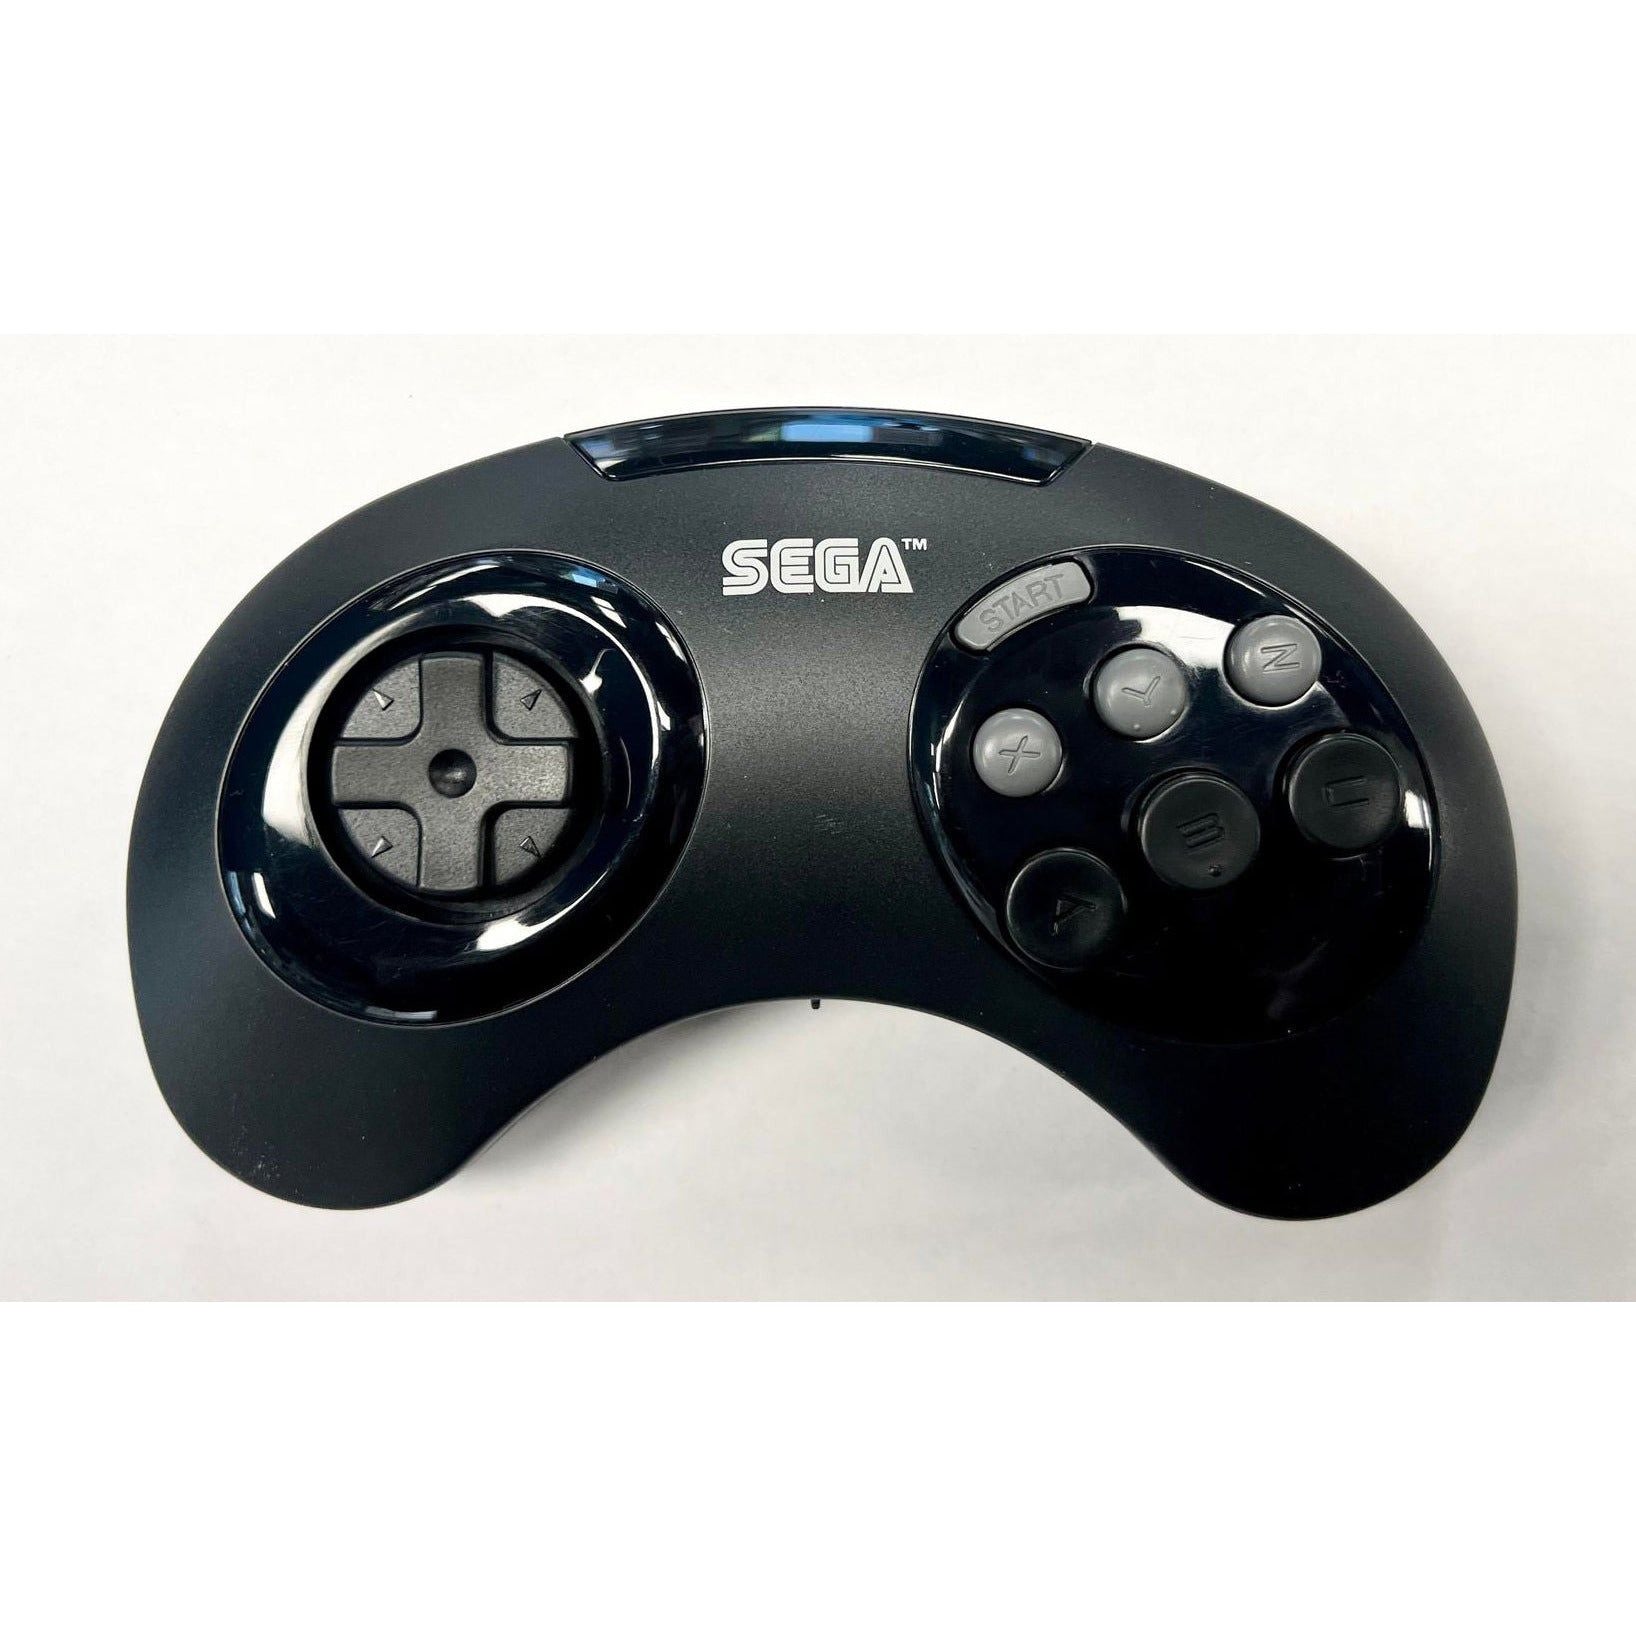 Sega Genesis Wireless Controller - 6 Button